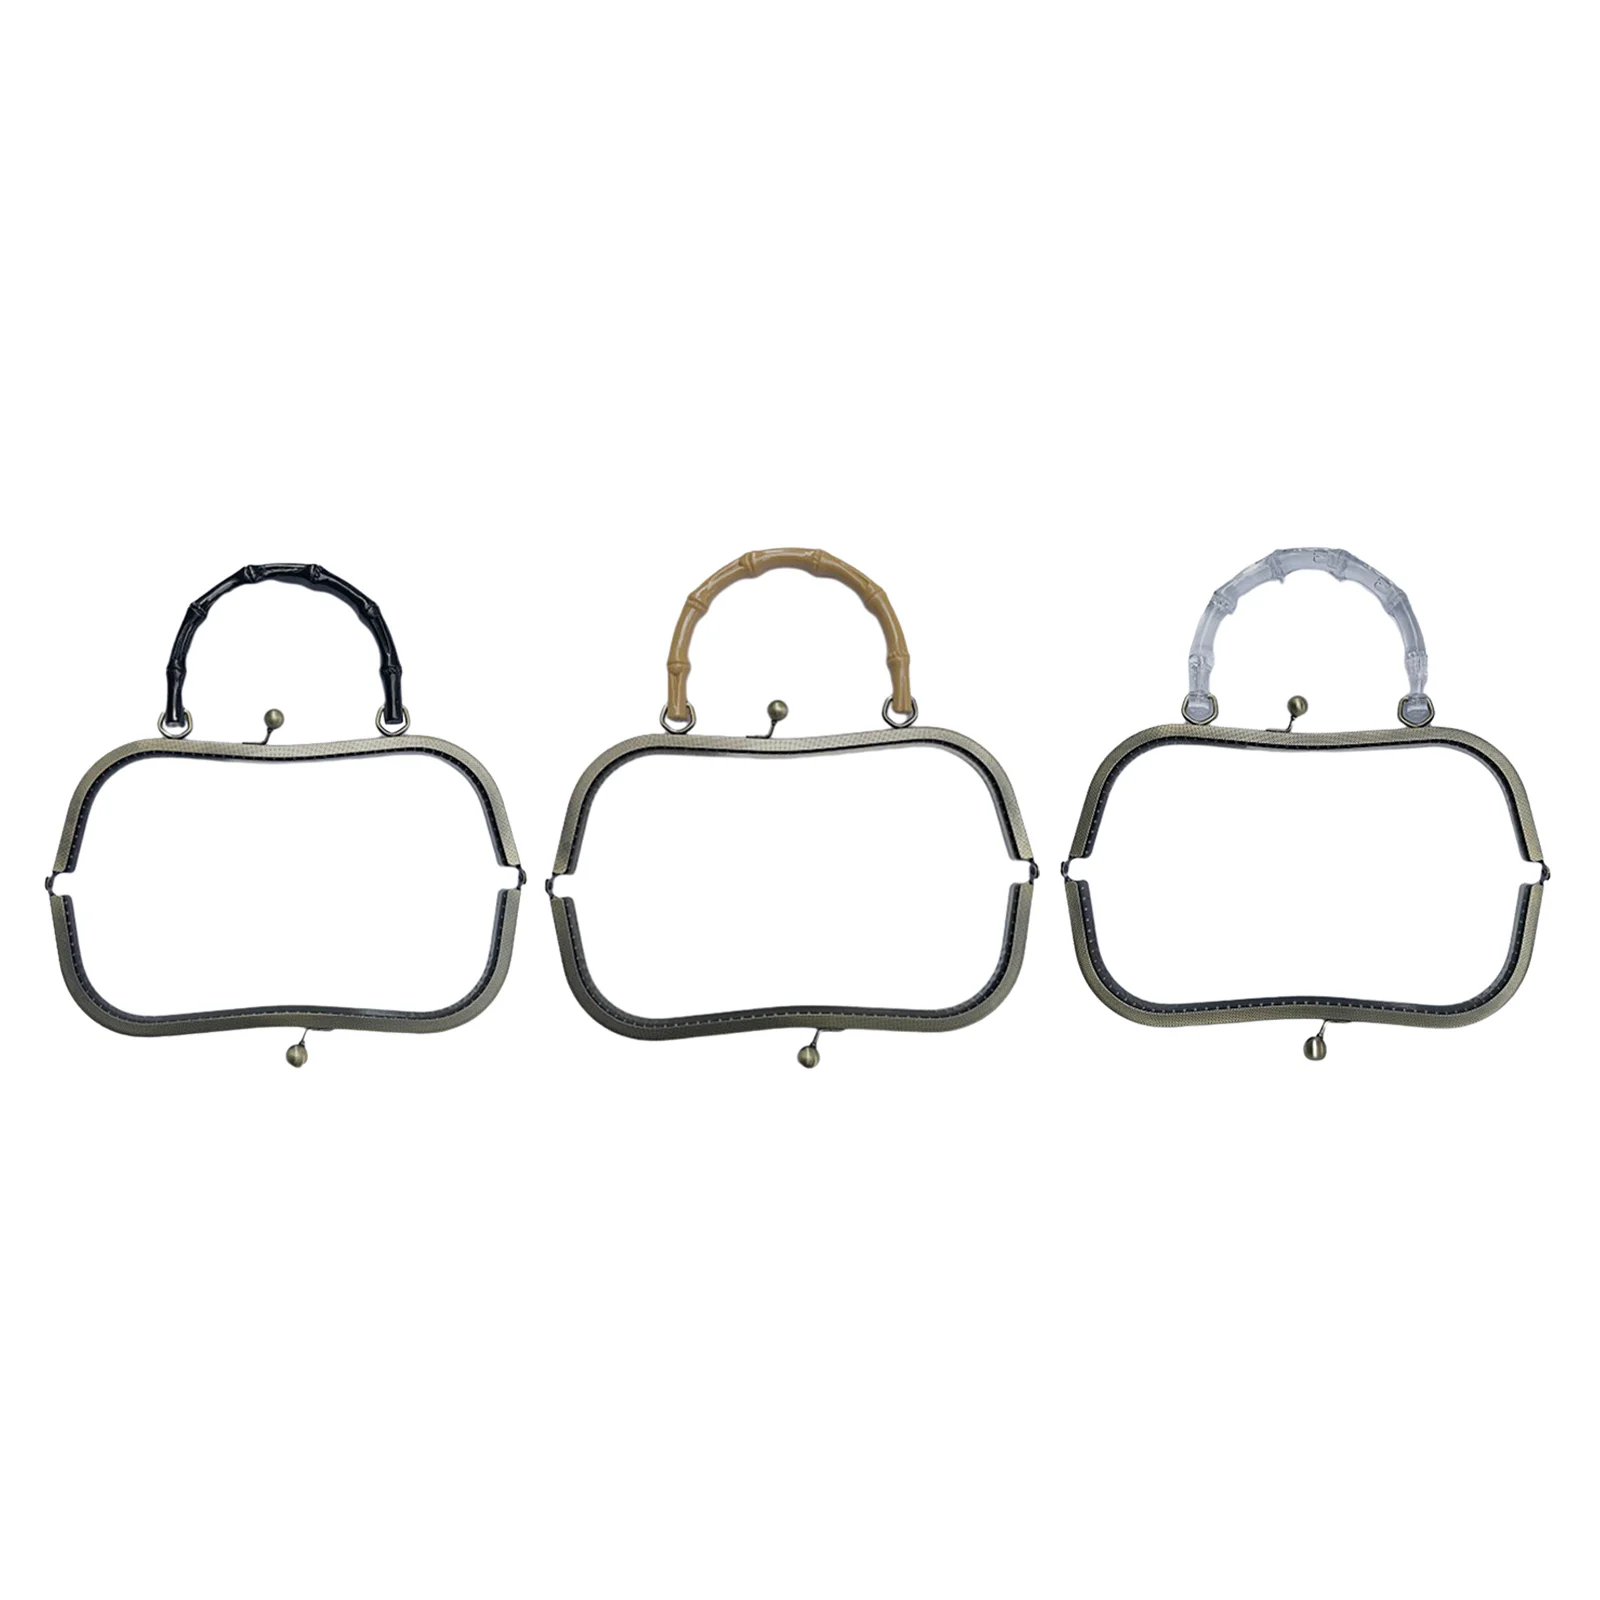 Retro Metal Purse Frame Handle for Clutch Bag DIY Handbag Decorations Accessories Making Kiss Clasp Lock Hardware